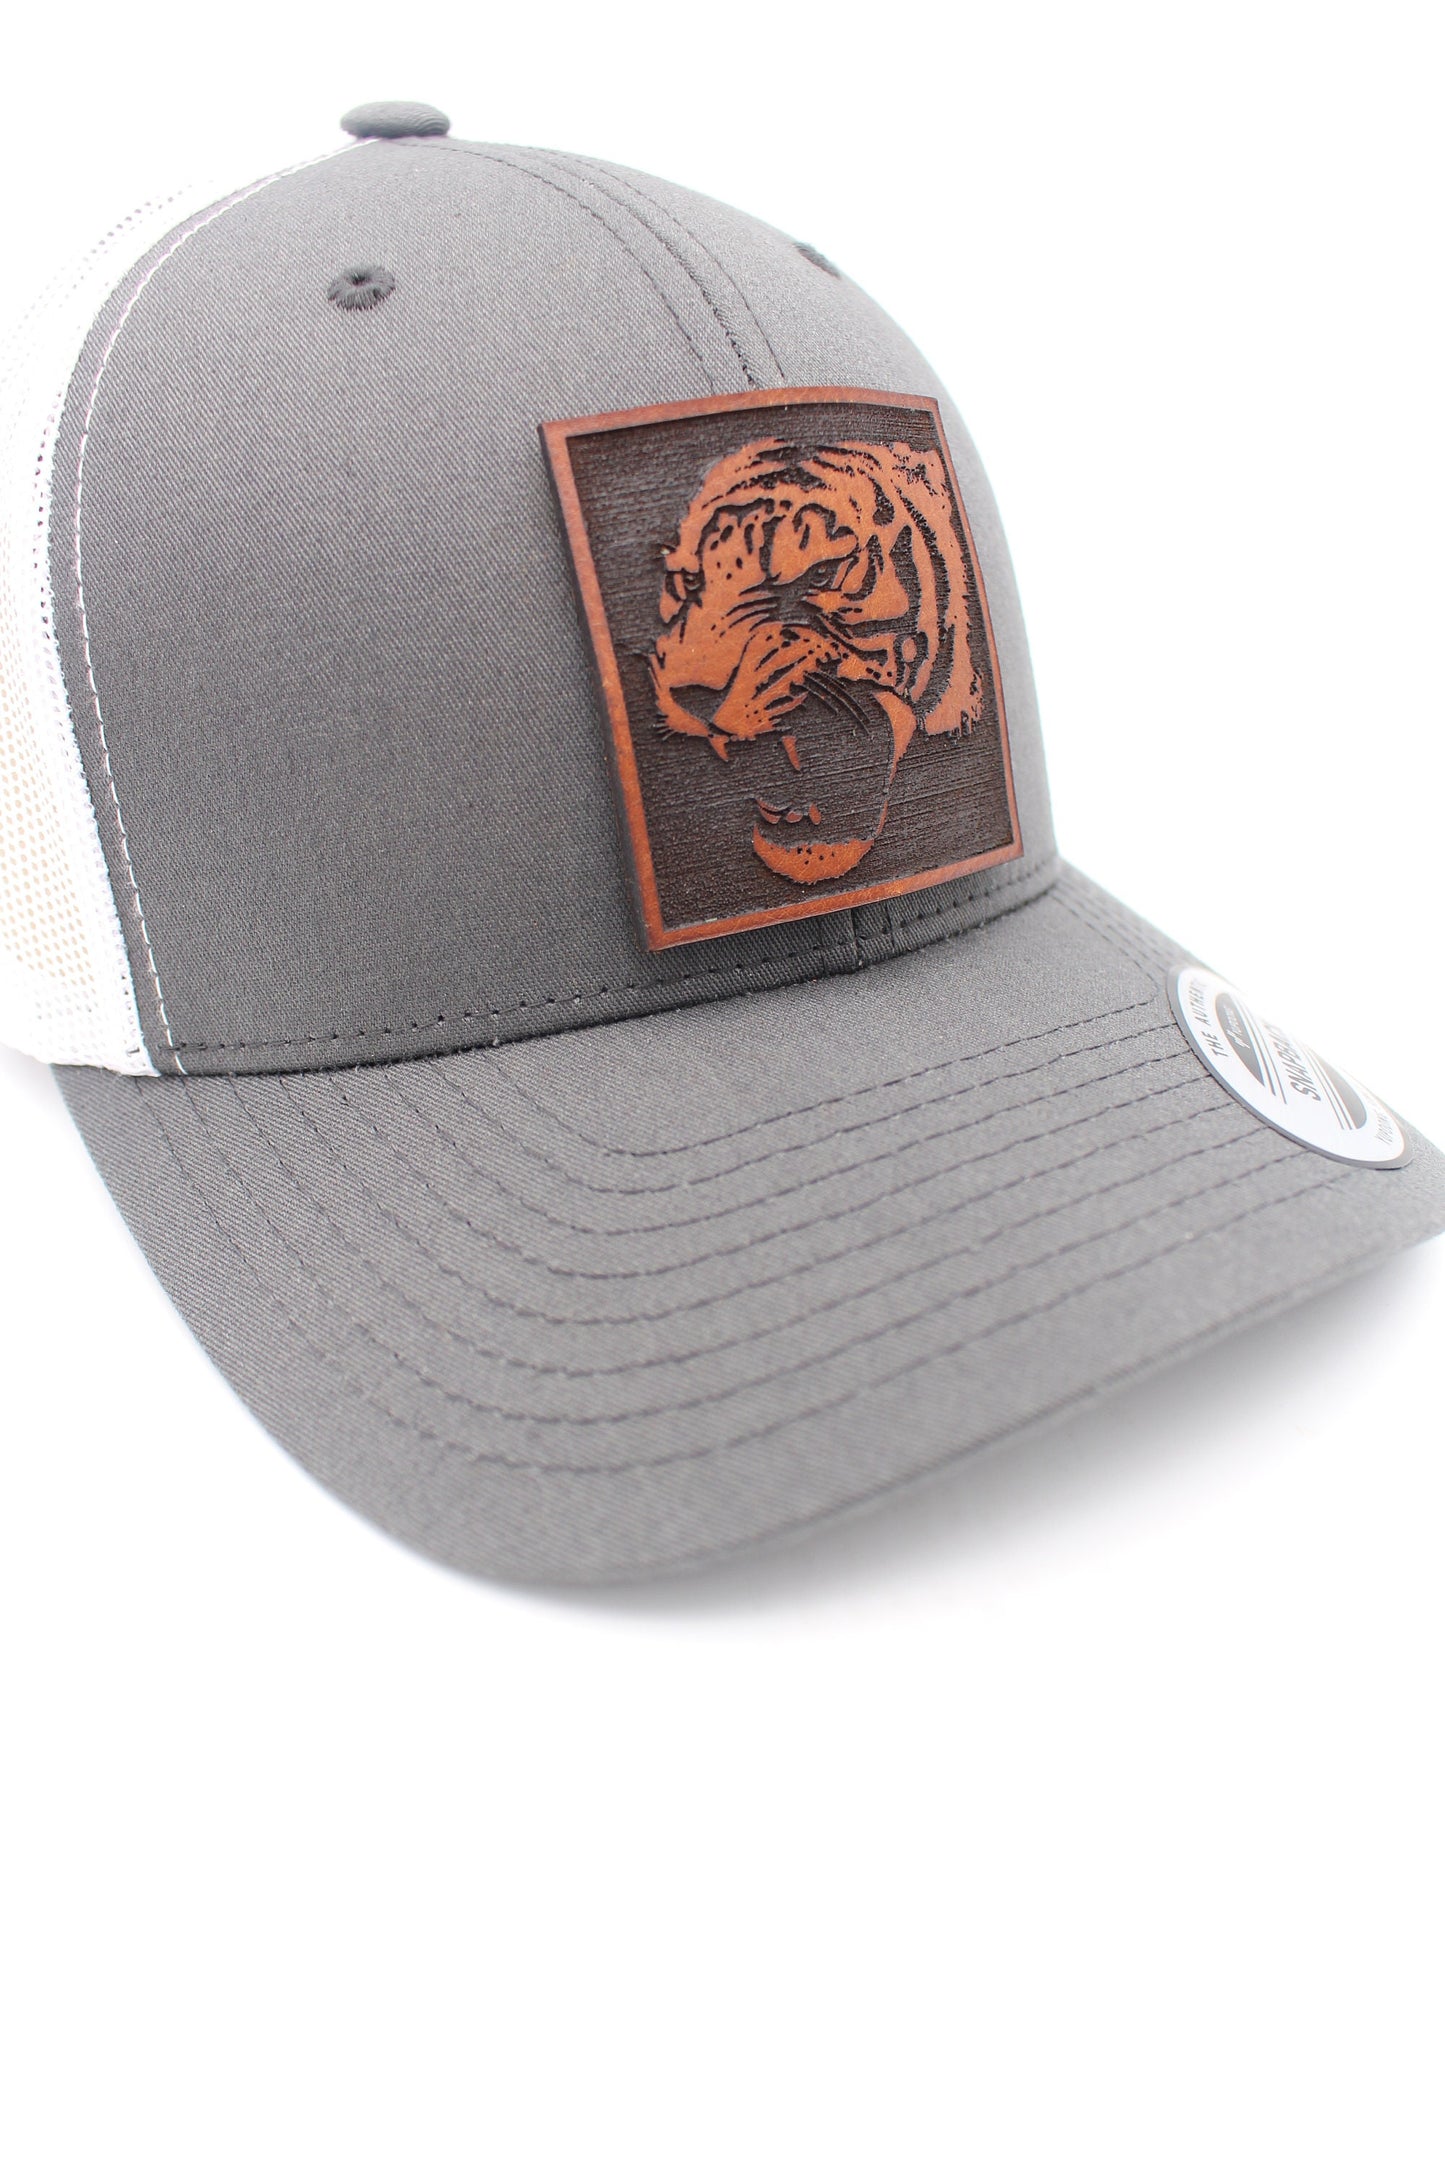 Tiger Hat | Angry Tiger Trucker Hat | Big Cat Art Trucker Hat